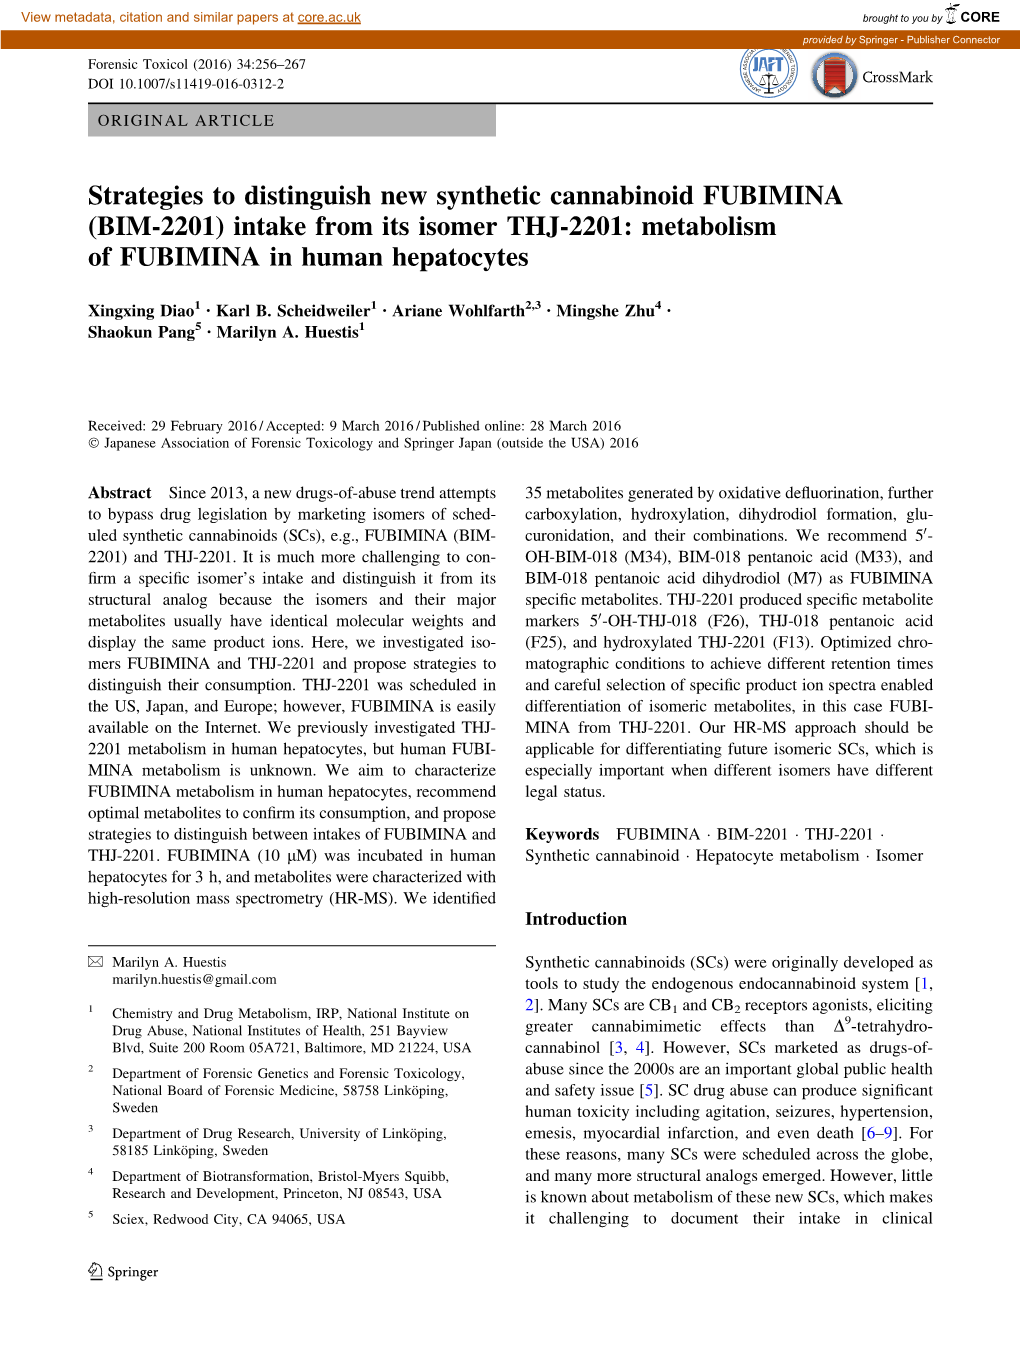 Metabolism of FUBIMINA in Human Hepatocytes